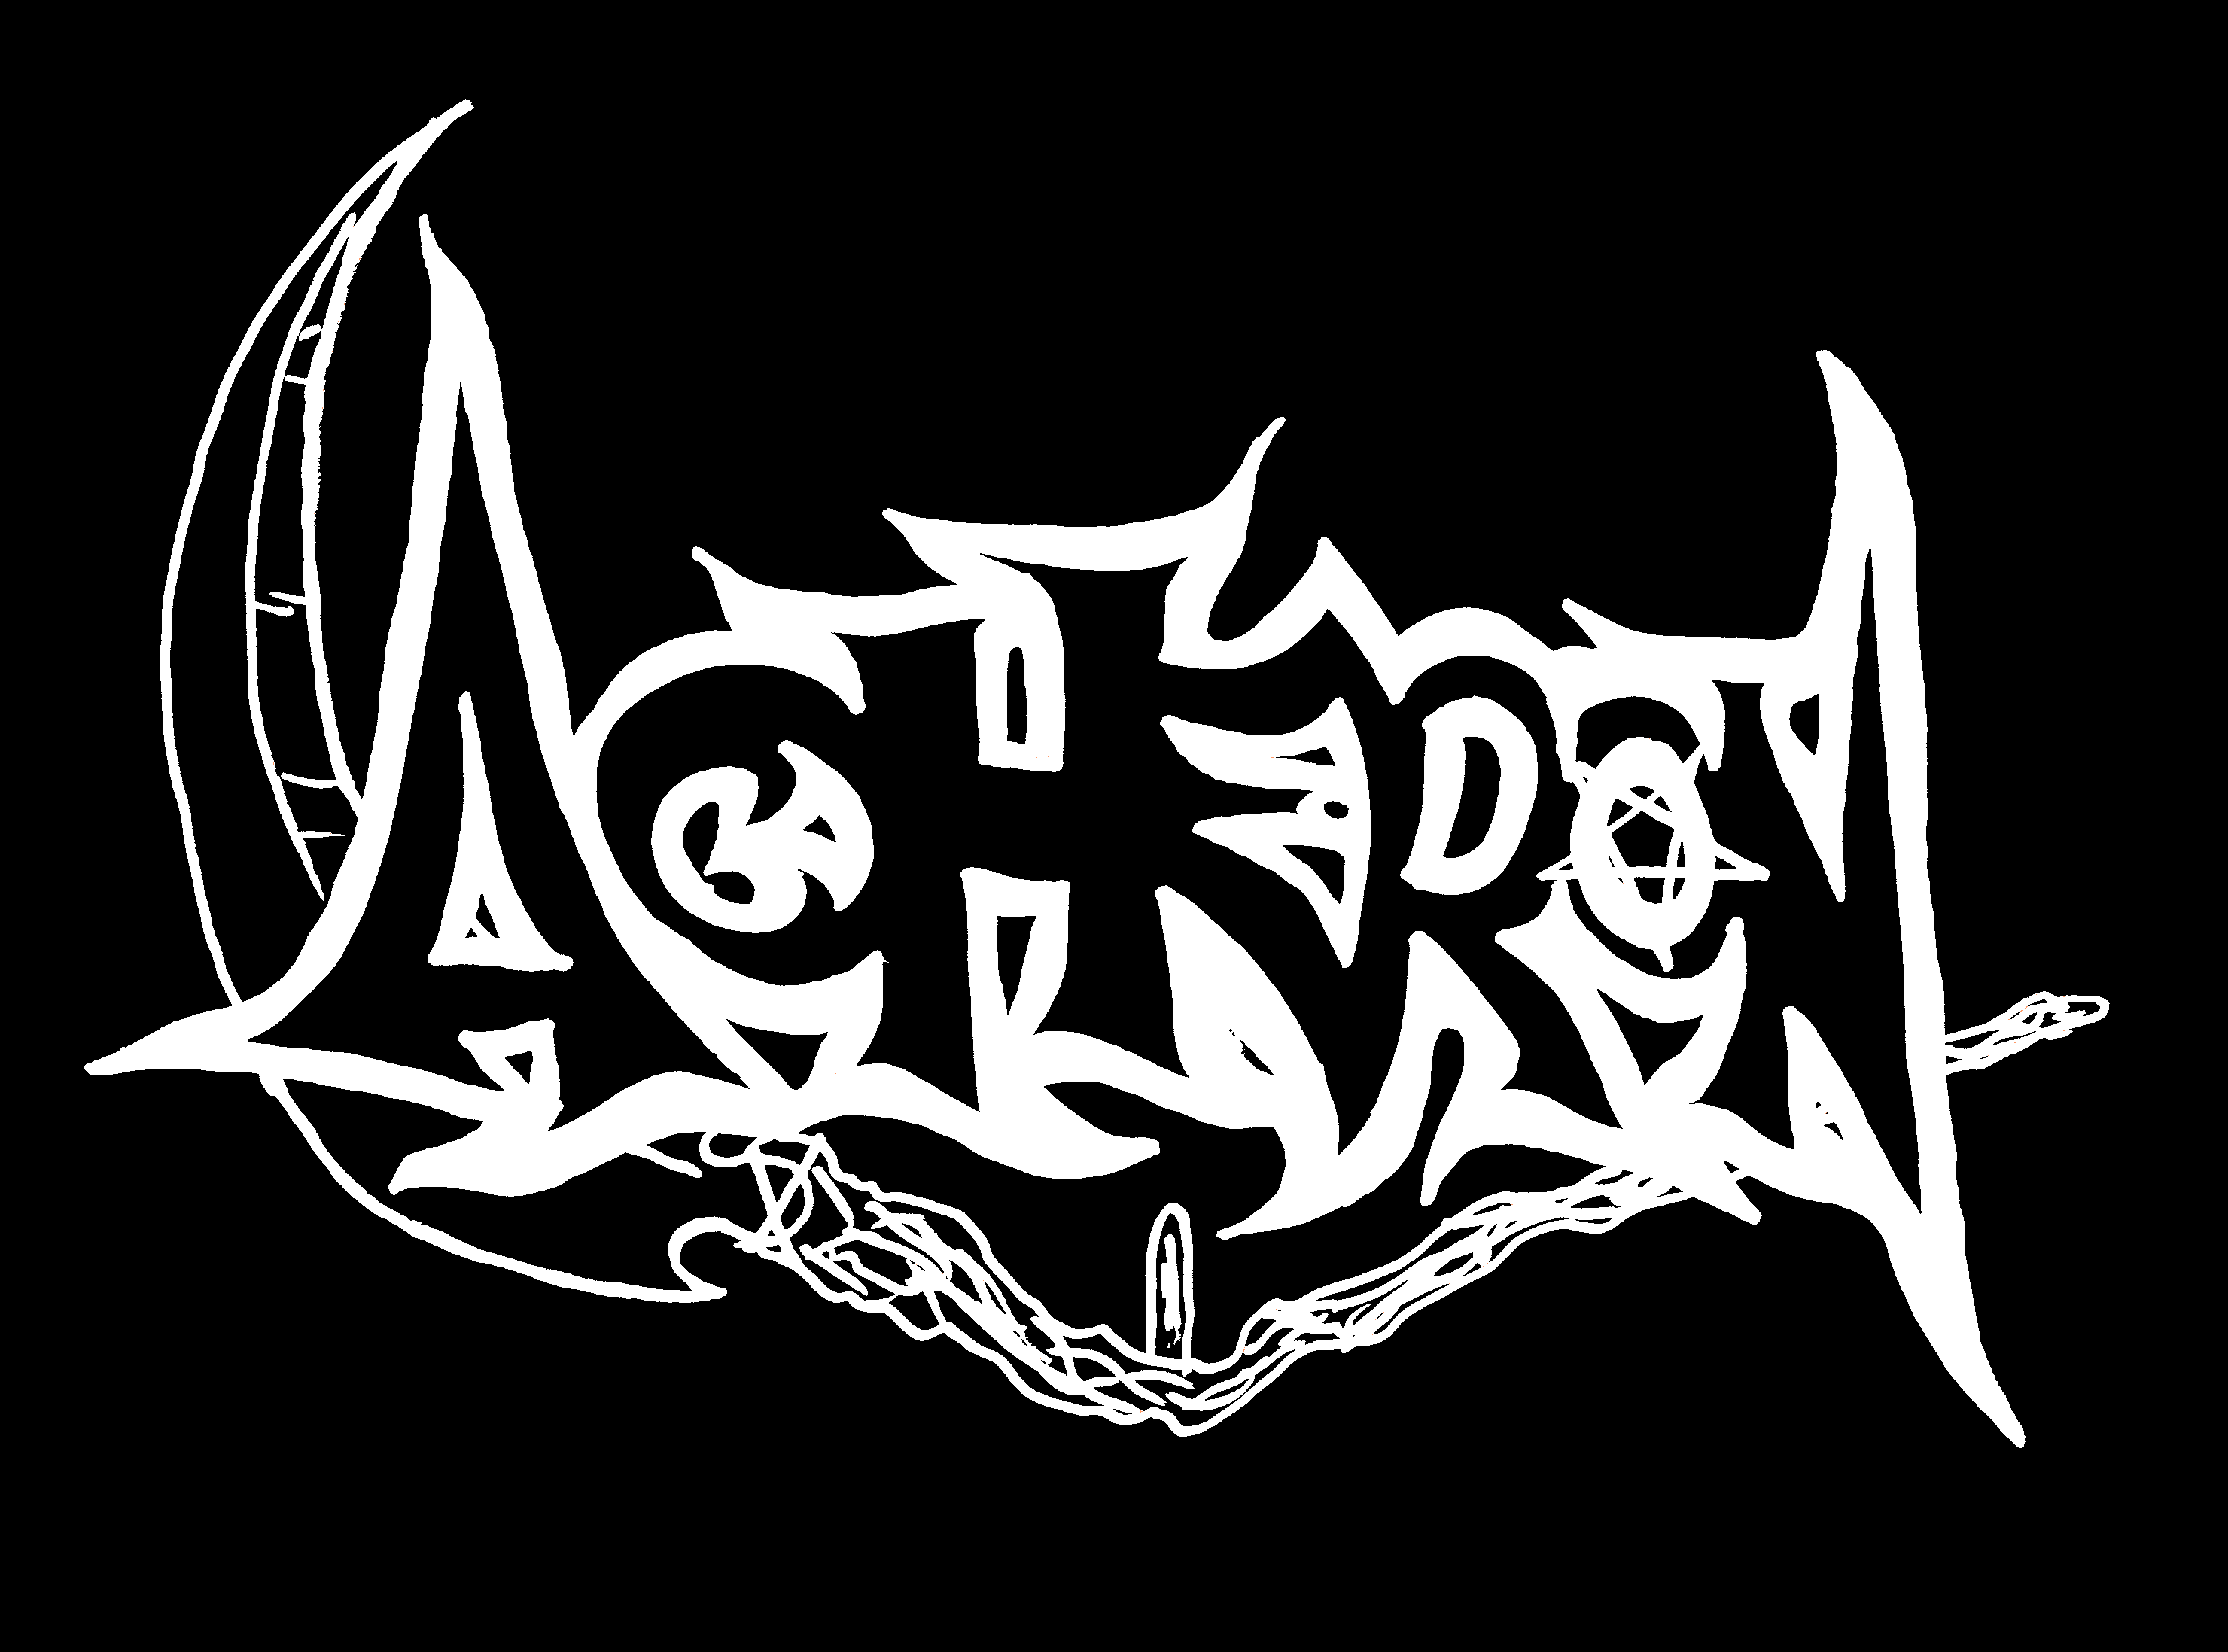 Acheron's logo